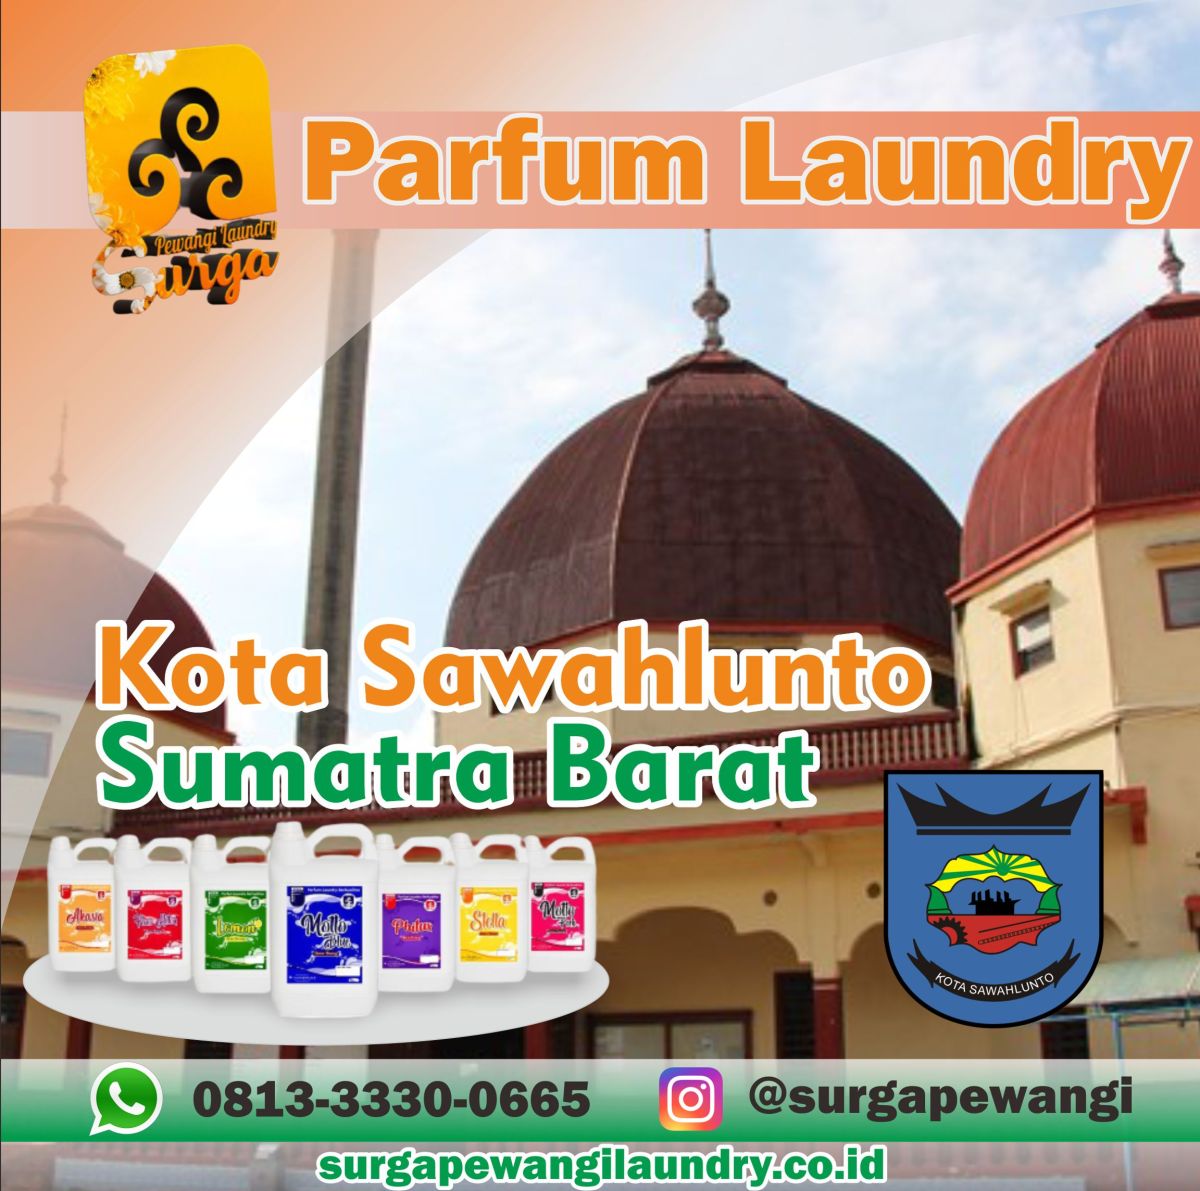 Parfum Laundry Kota Sawahlunto, Sumatra Barat